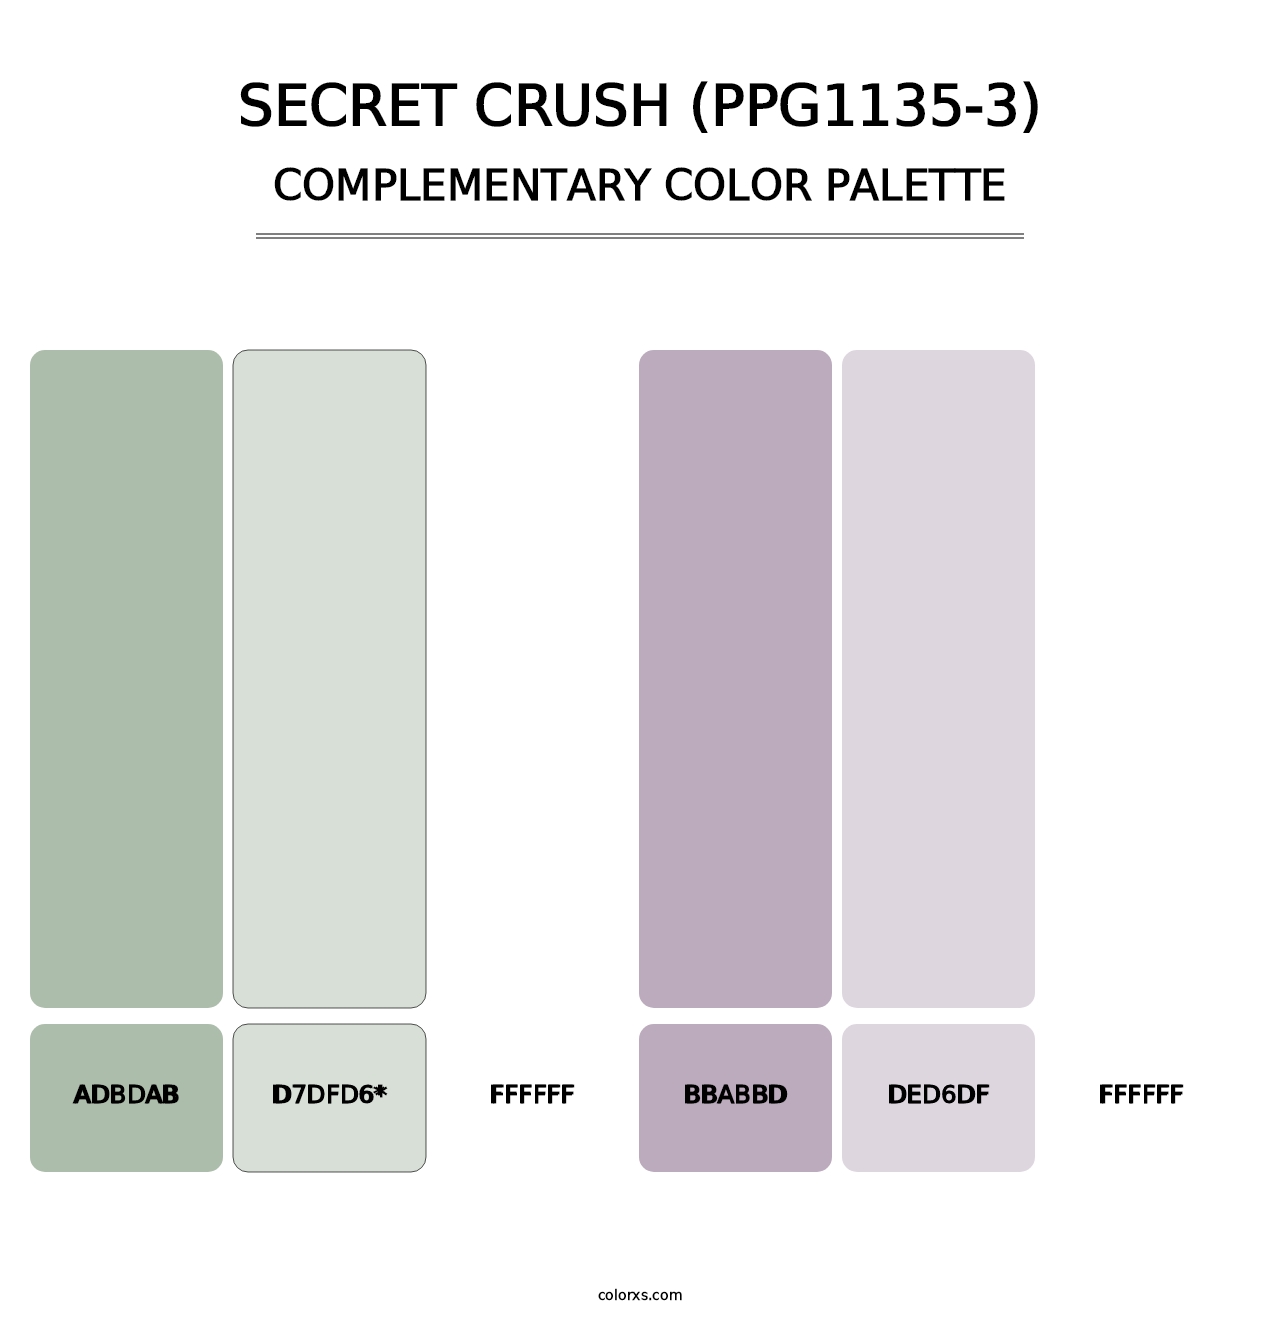 Secret Crush (PPG1135-3) - Complementary Color Palette